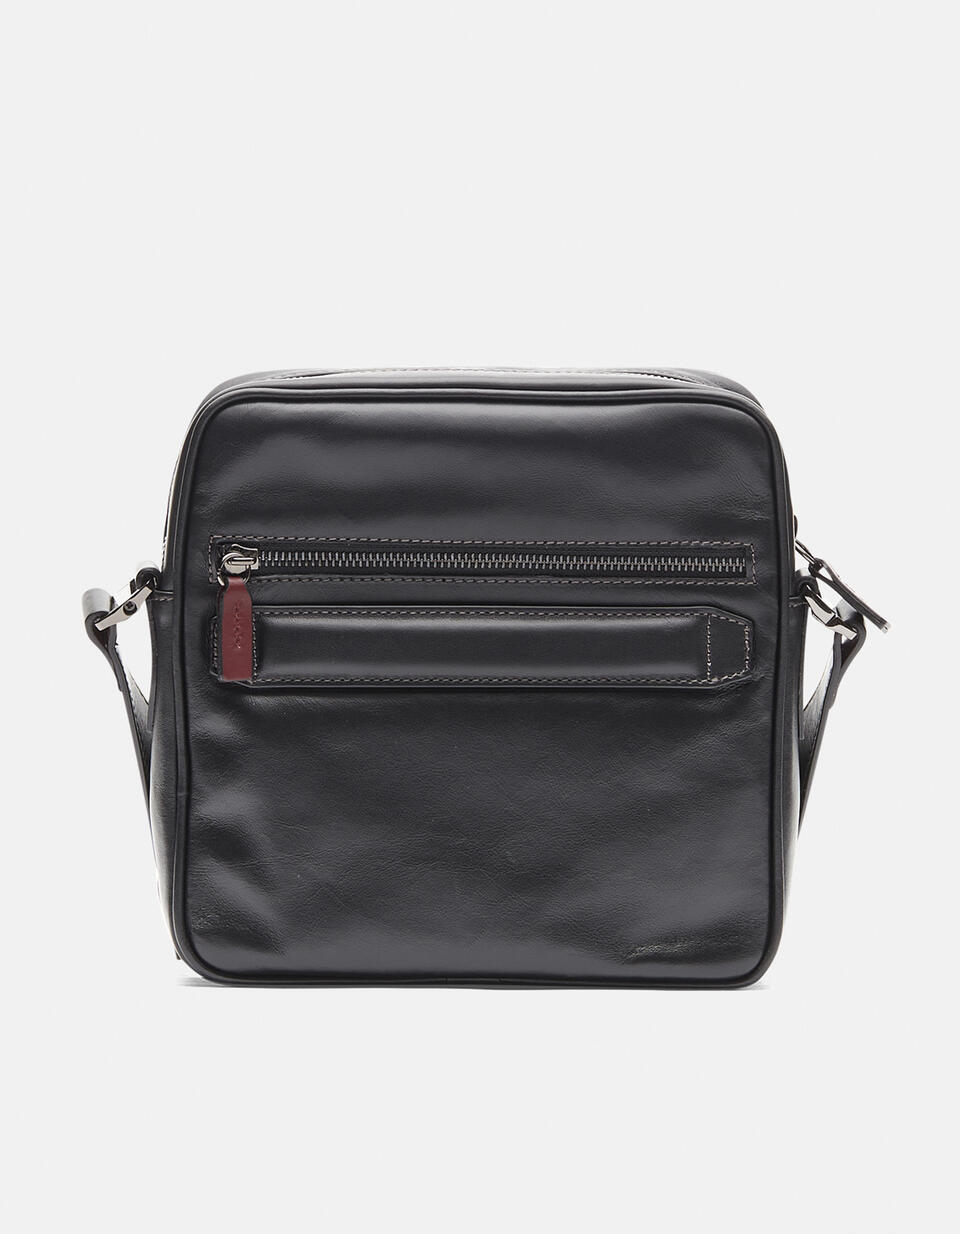 Adam Shoulder bag with front zip - Crossbody Bags - MEN'S BAGS | bags NEROBORDEAUX - Crossbody Bags - MEN'S BAGS | bagsCuoieria Fiorentina